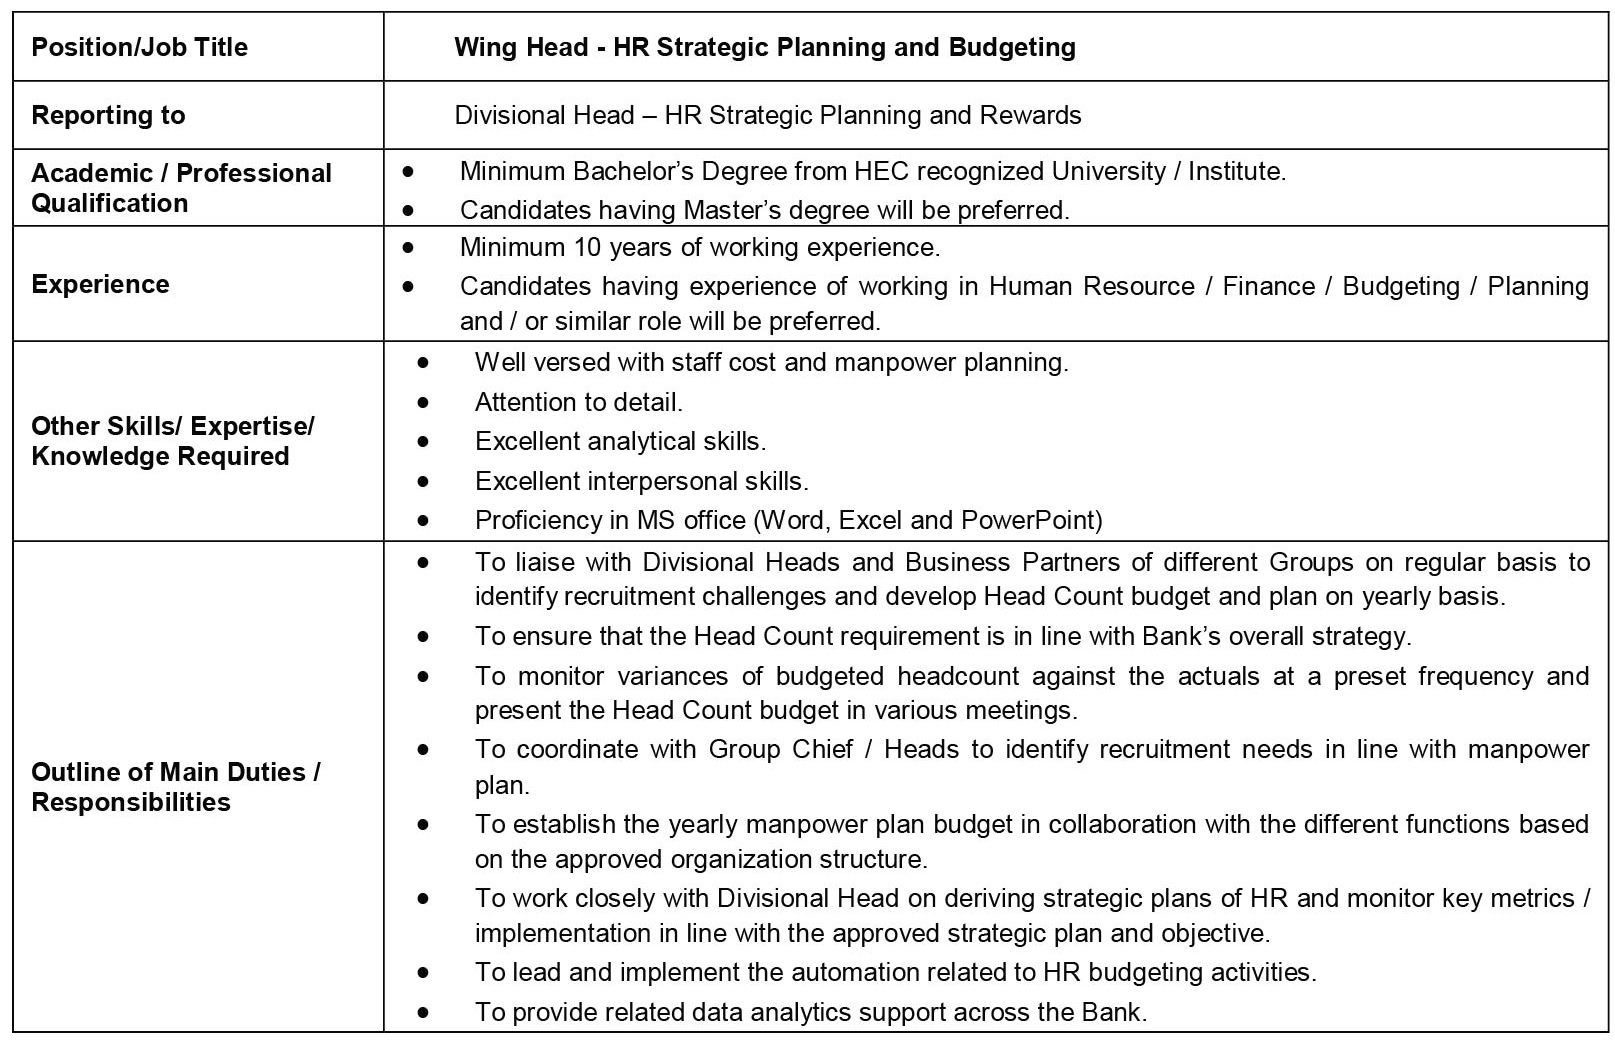 Wing Head HR Strategic Planning & Budgeting -Karachi